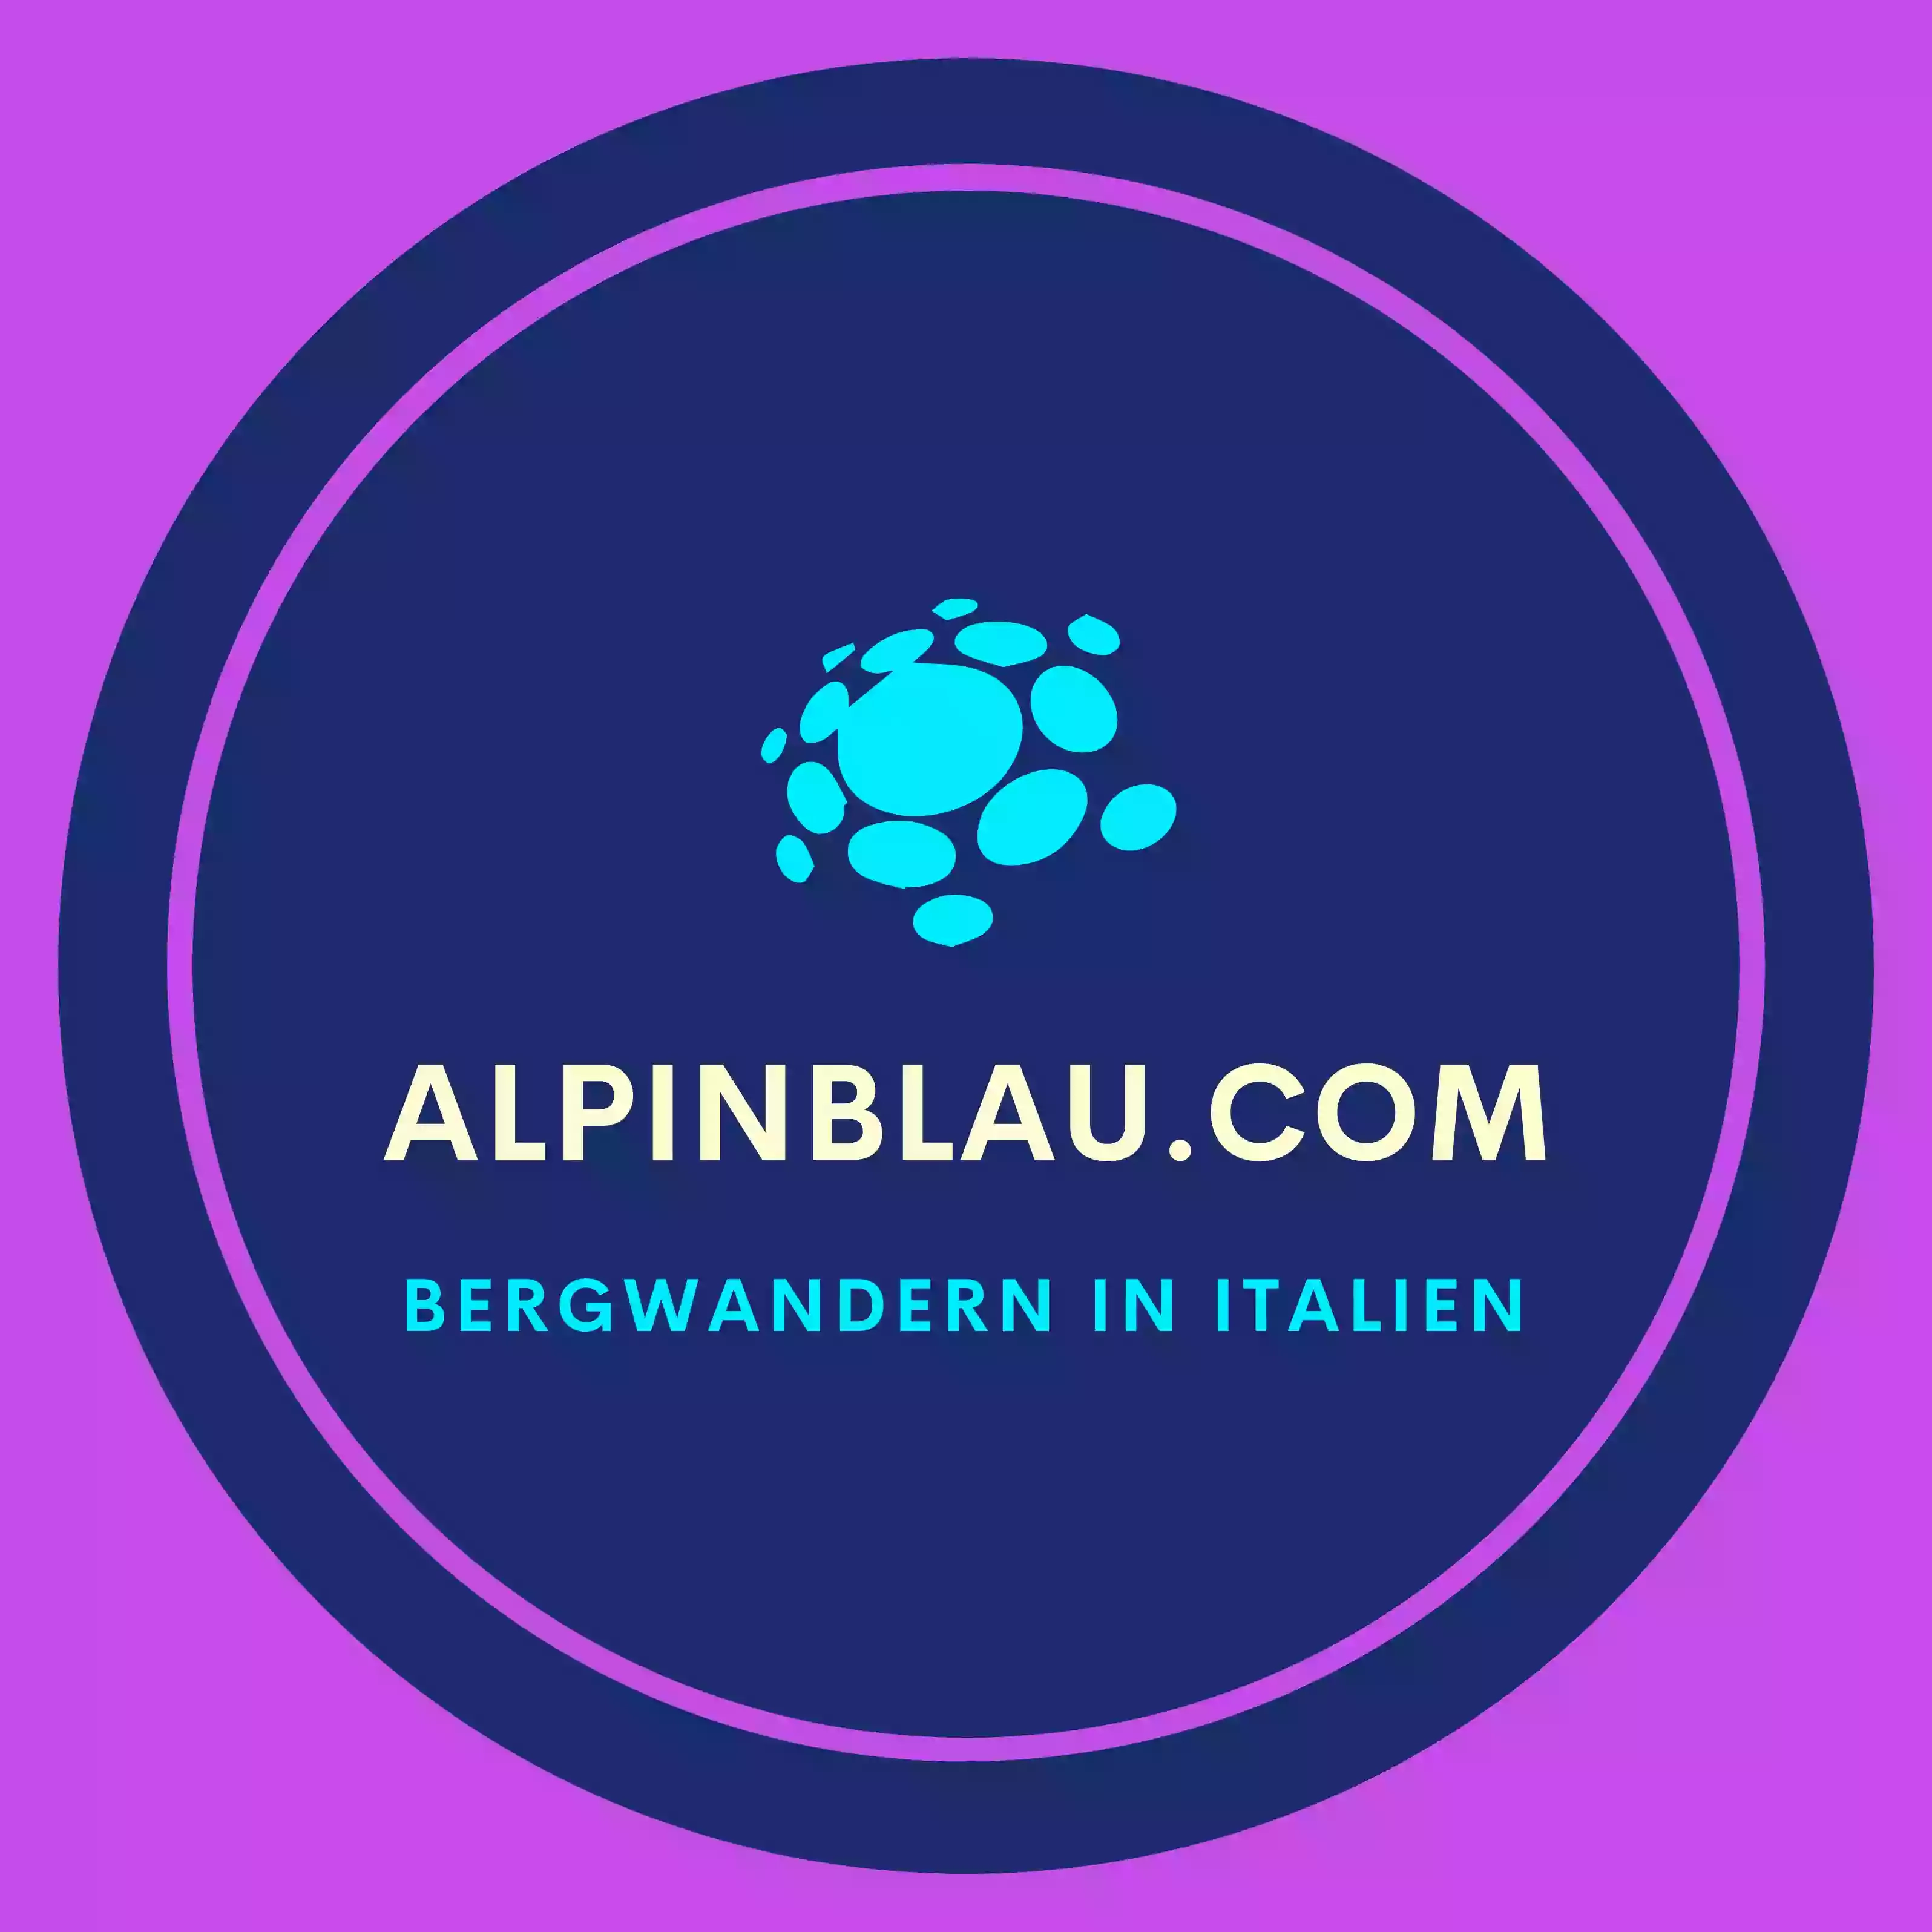 Alpinblau.com